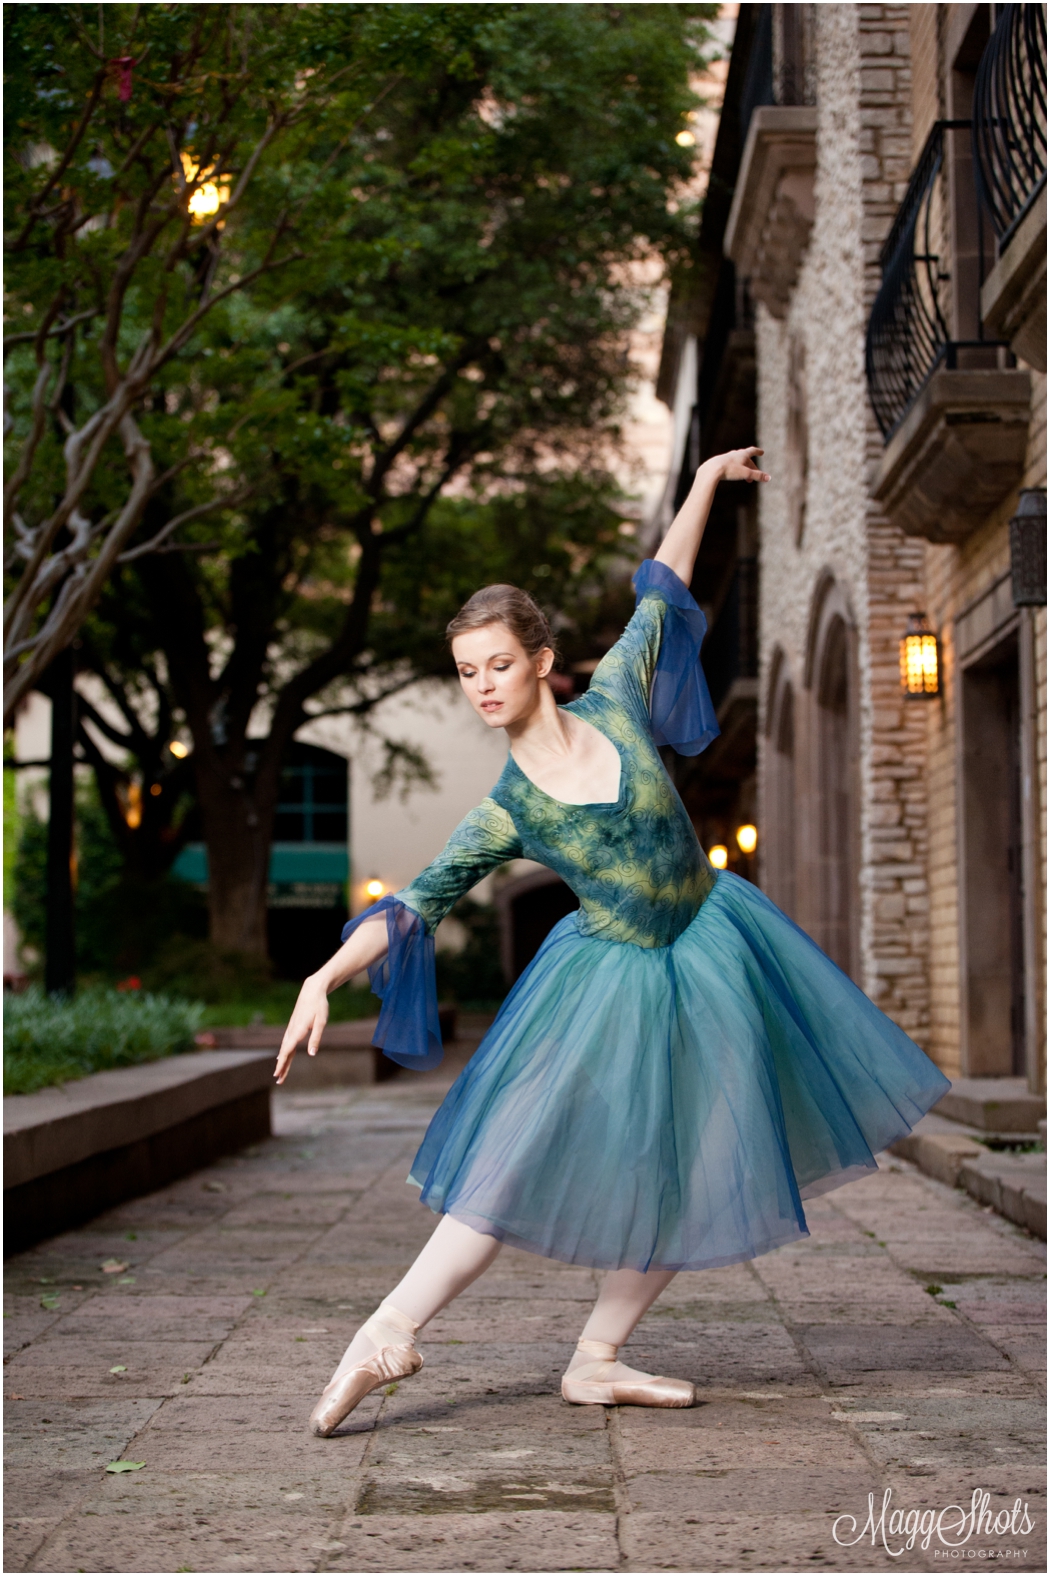 Ballet Portraits at the Las Colinas Mandalay Canals in Irving Texas #MaggShotsSenior